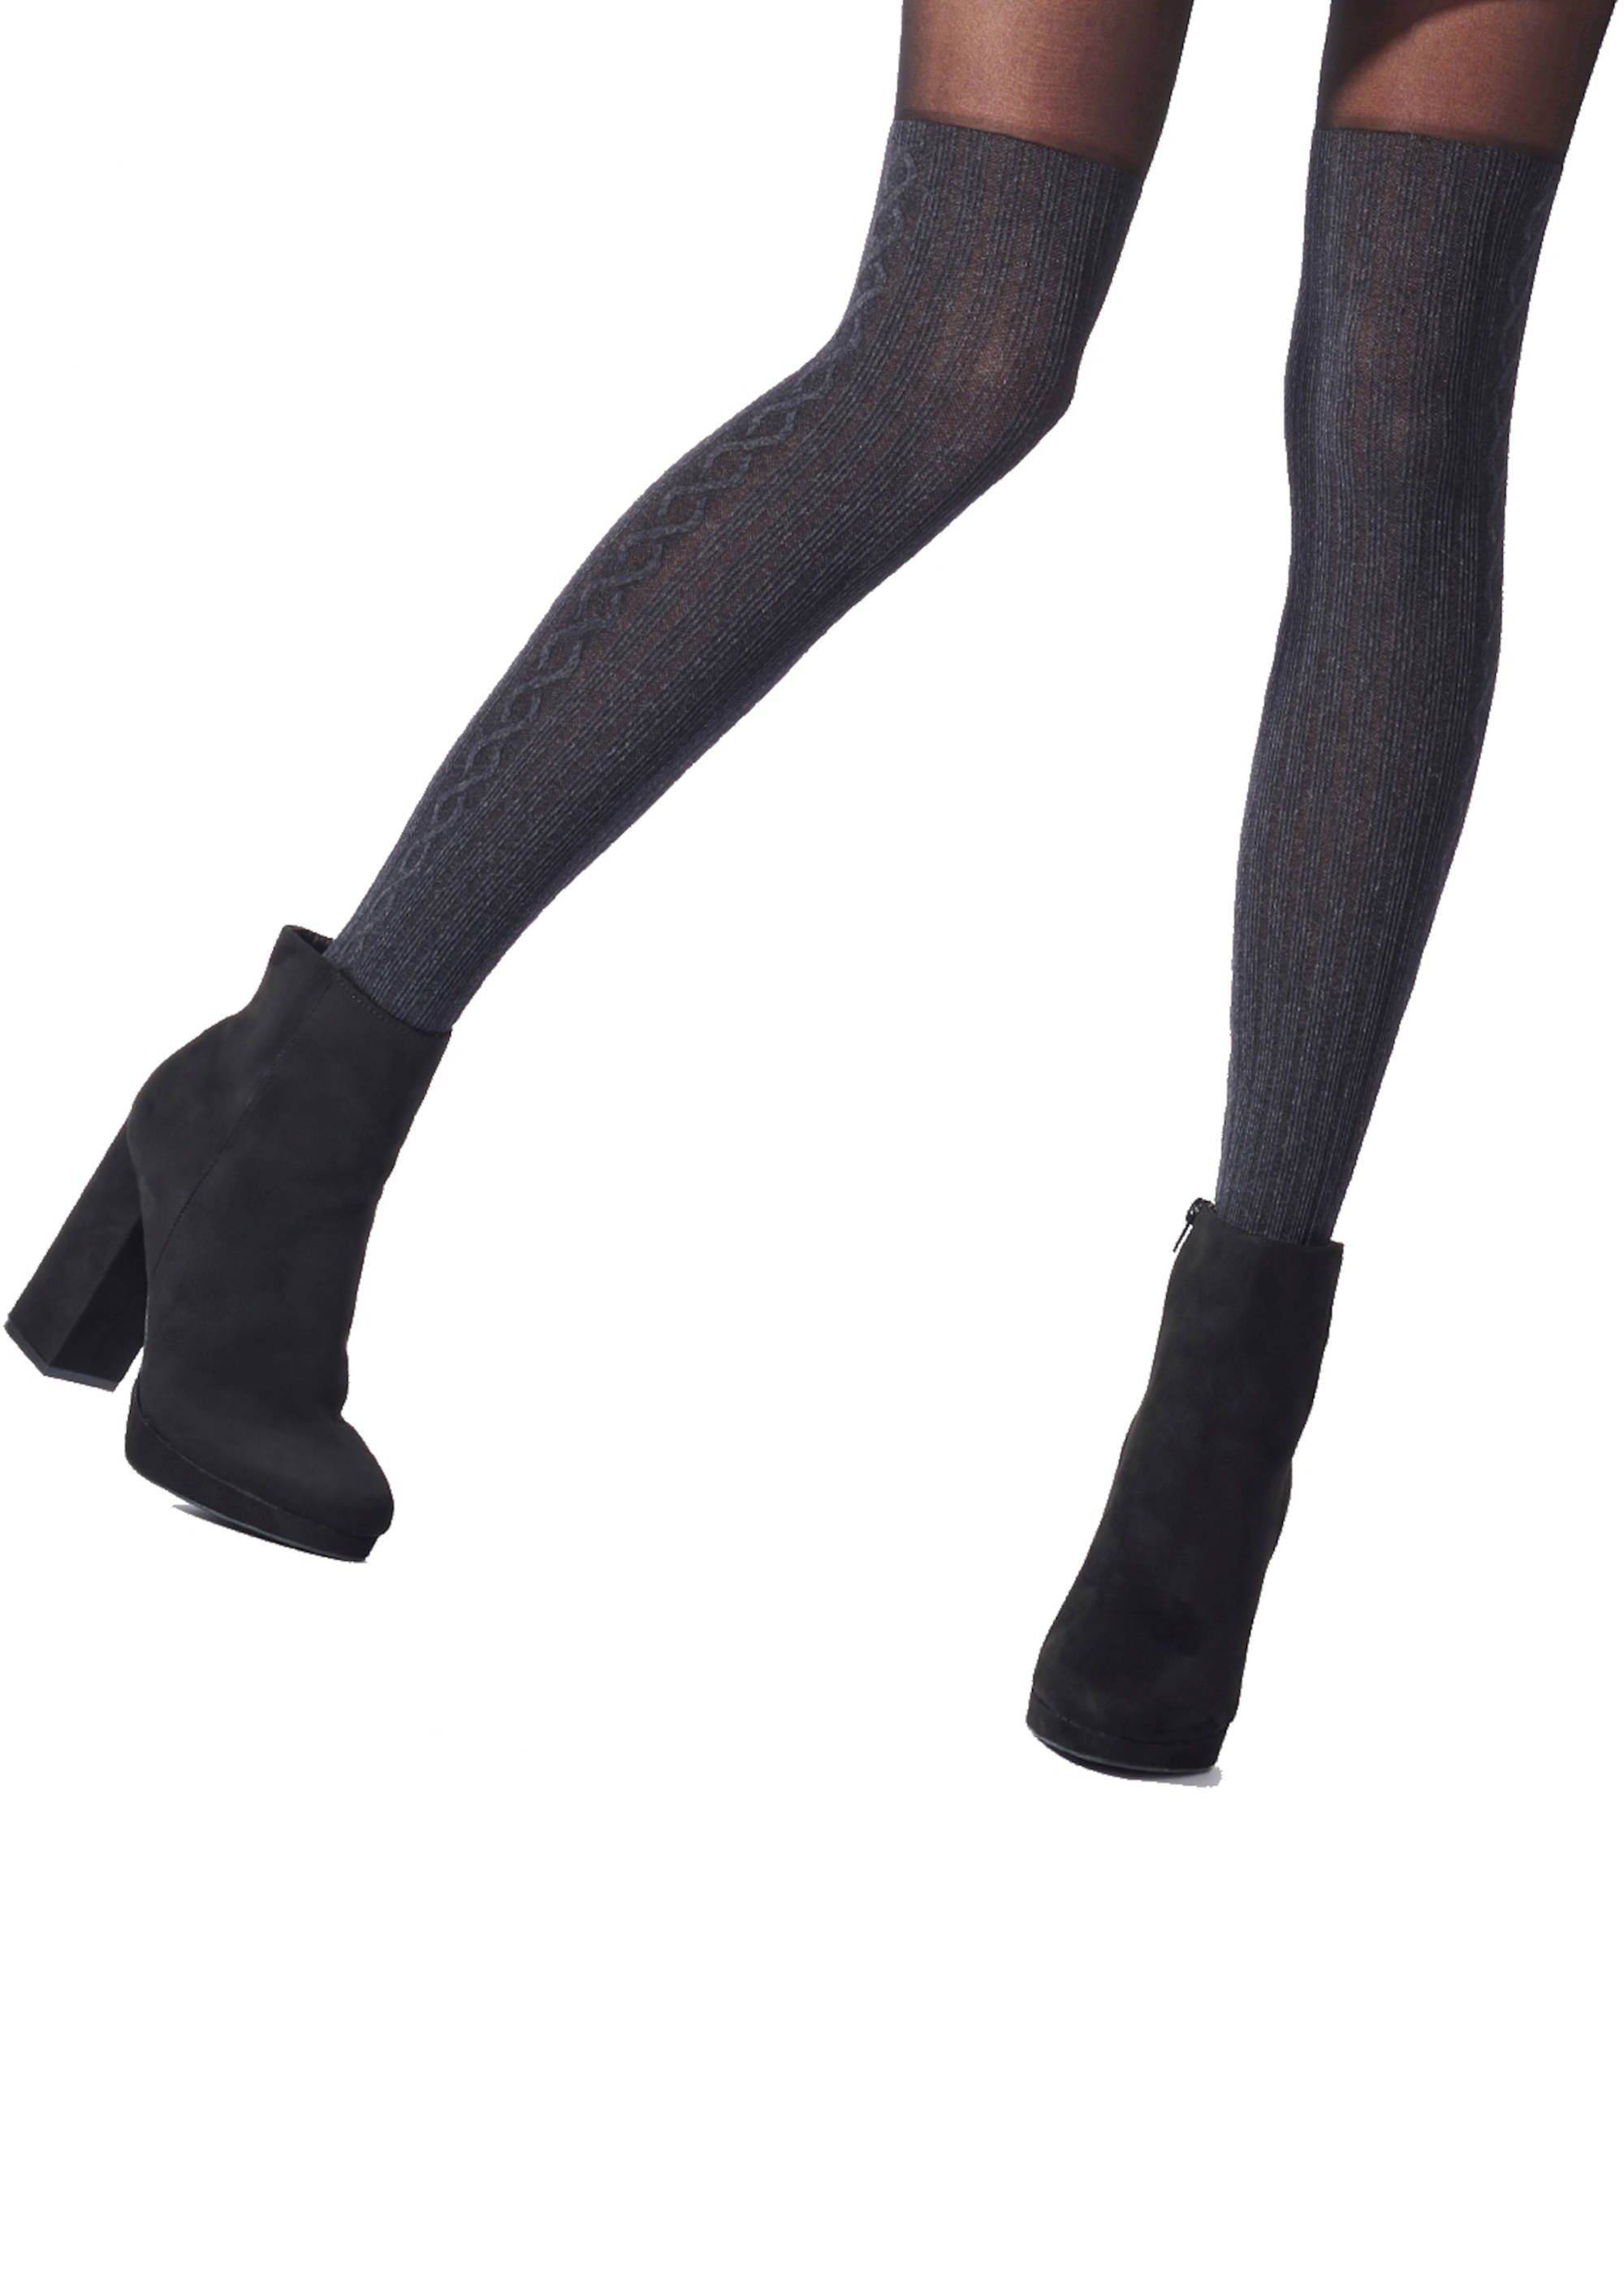 Sock ohne 1 Pretty Naht Cable Fashion DEN glatt) Premium Tights Marl 30 St. Overknee Polly (Strumpfhose Feinstrumpfhose